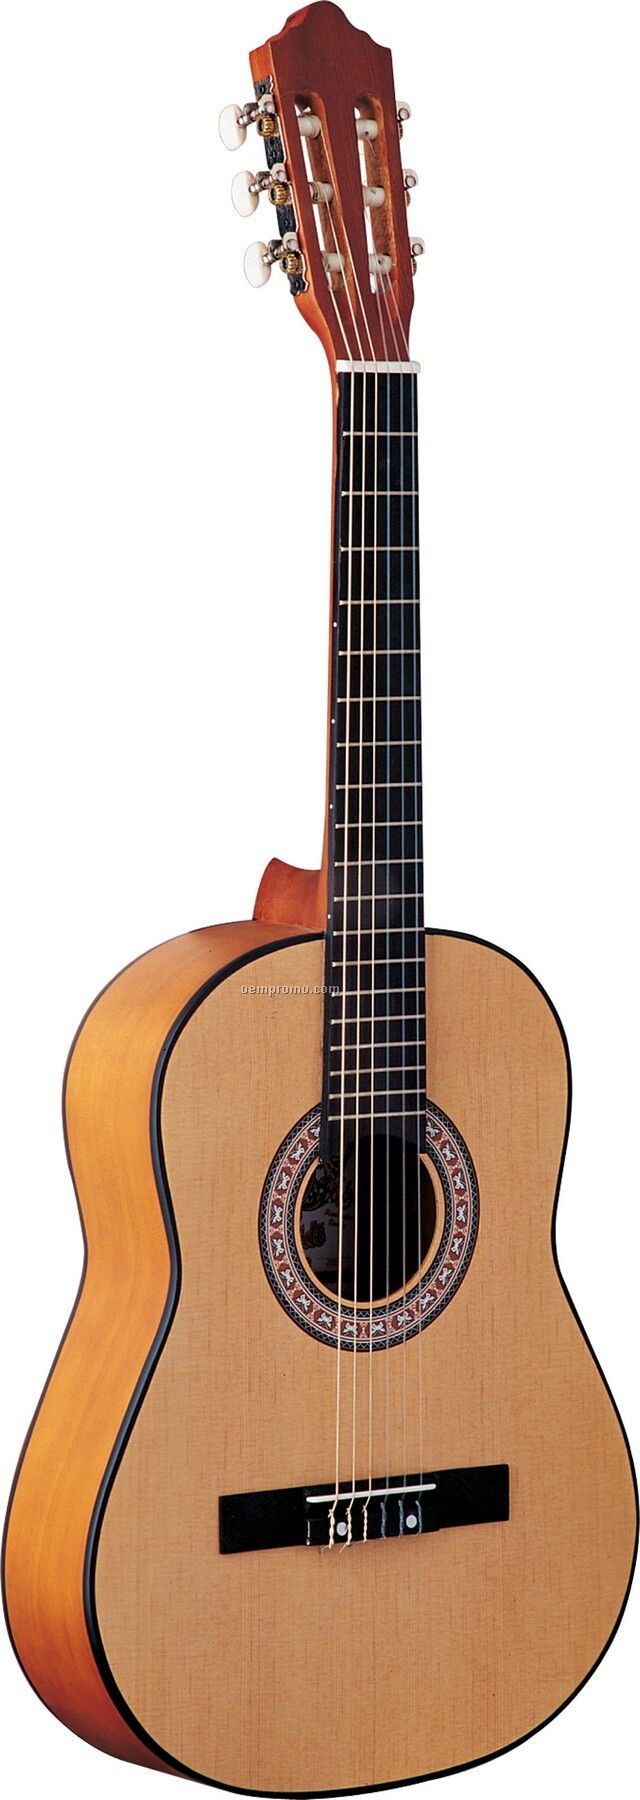 Oscar Schmidt 3/4 Size Nylon String Acoustic Guitar